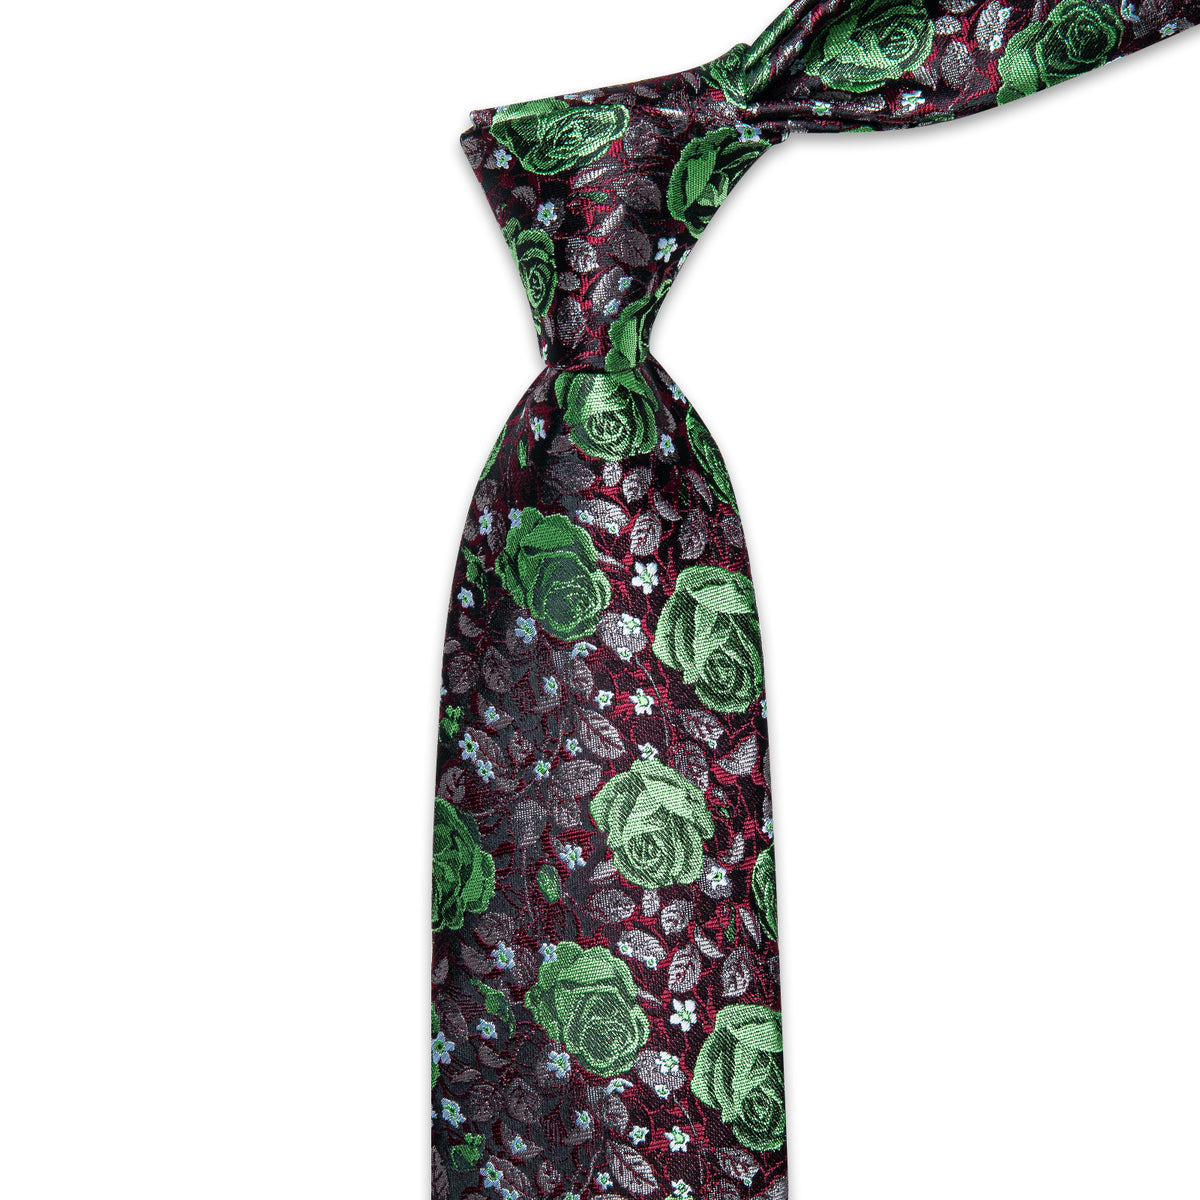 Green Red Black Floral Men's Necktie Pocket Square Cufflinks Set